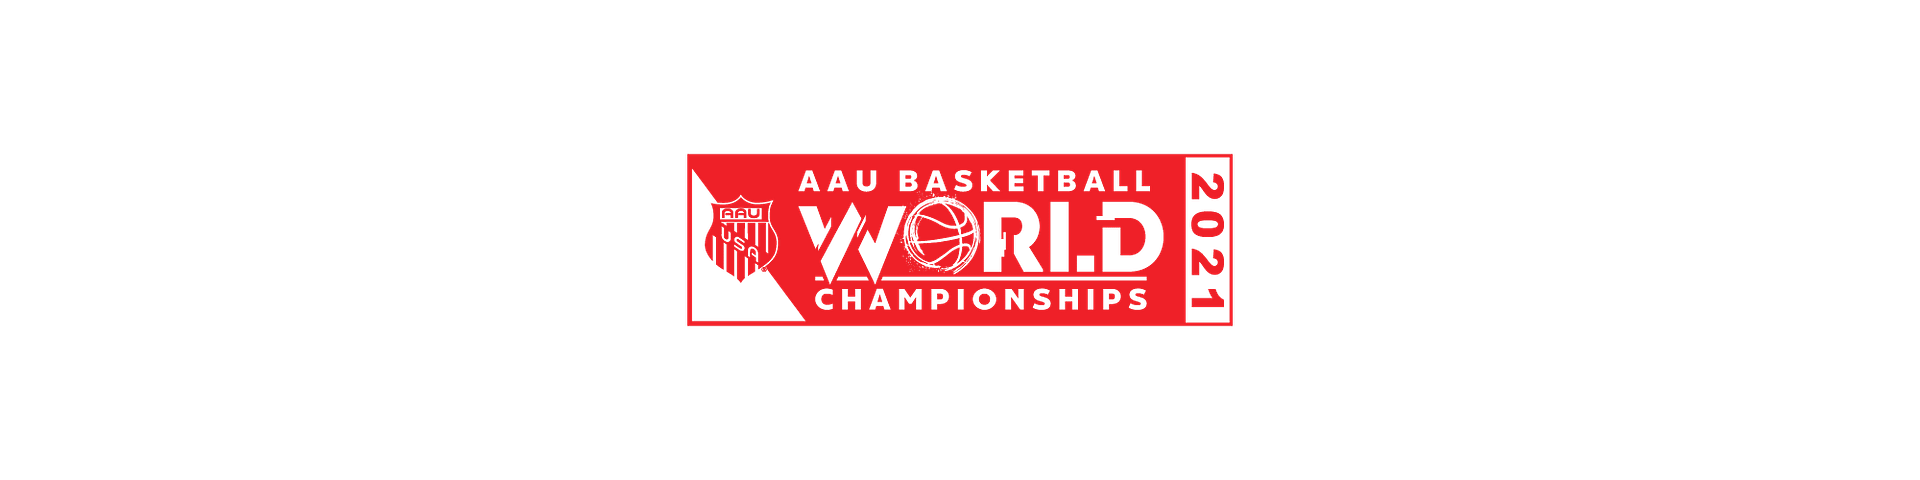 AAU World Championships 2021